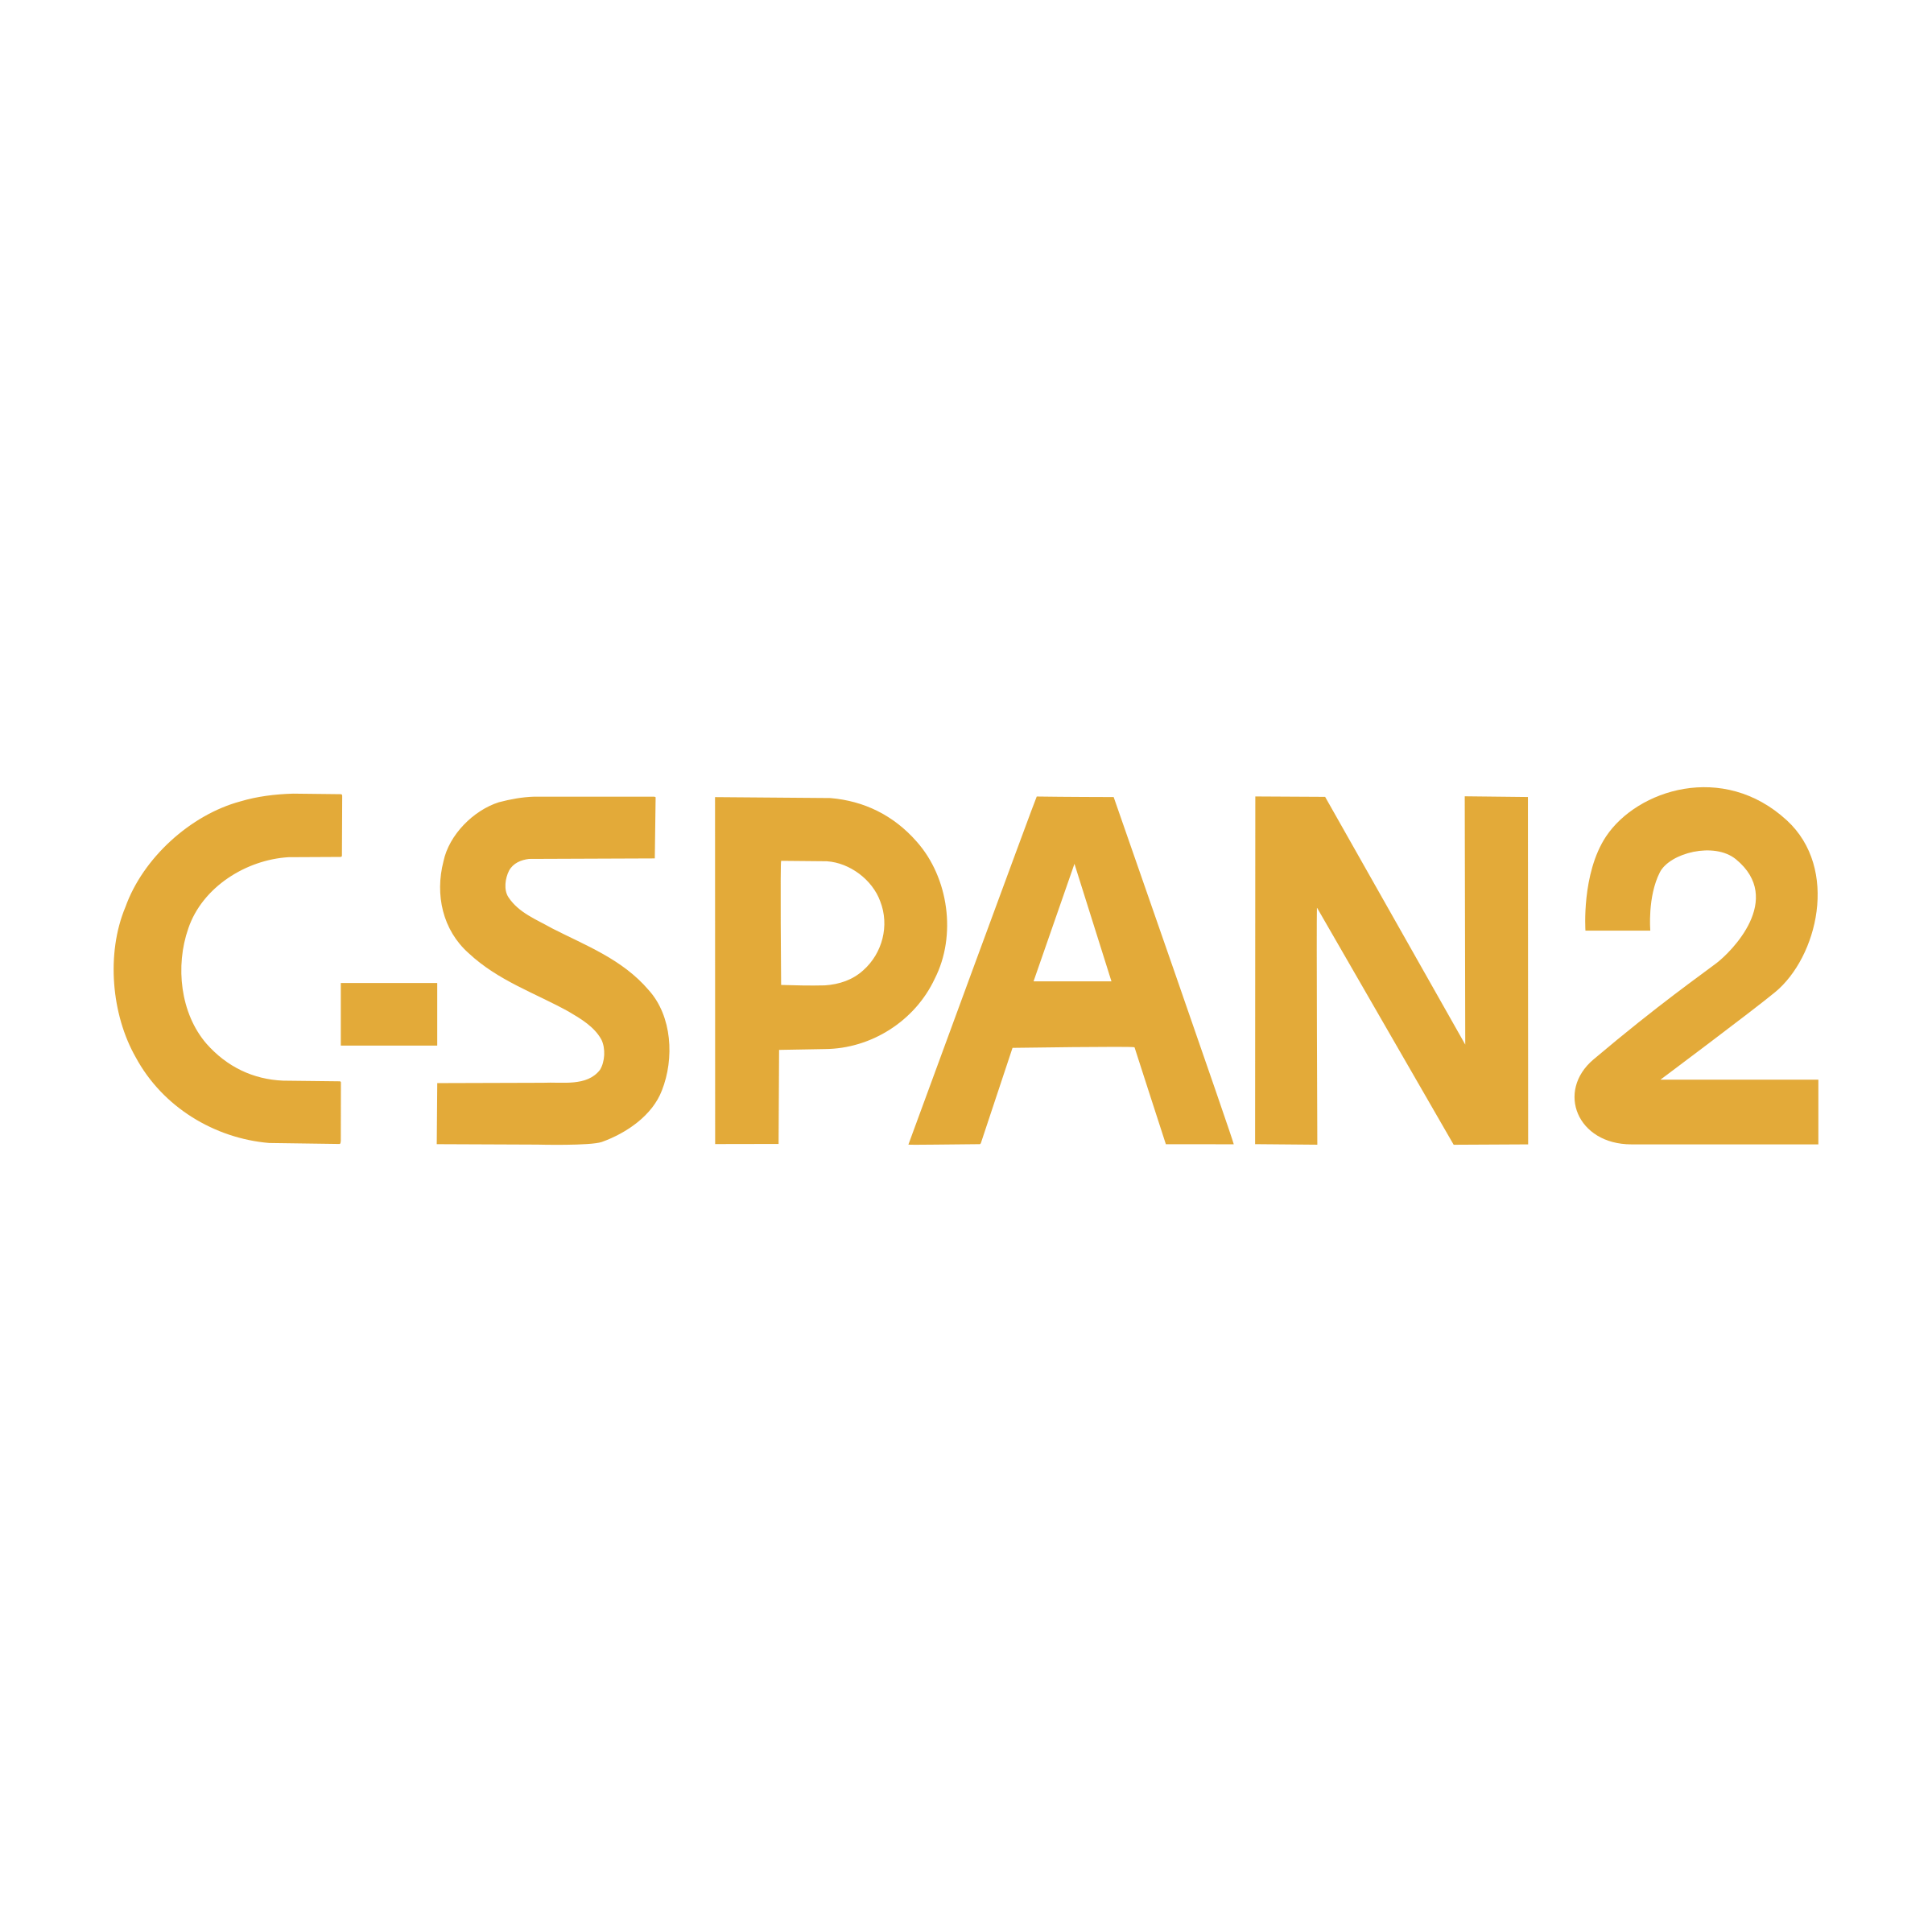 C-SPAN Logo - C span 2 Logo PNG Transparent & SVG Vector